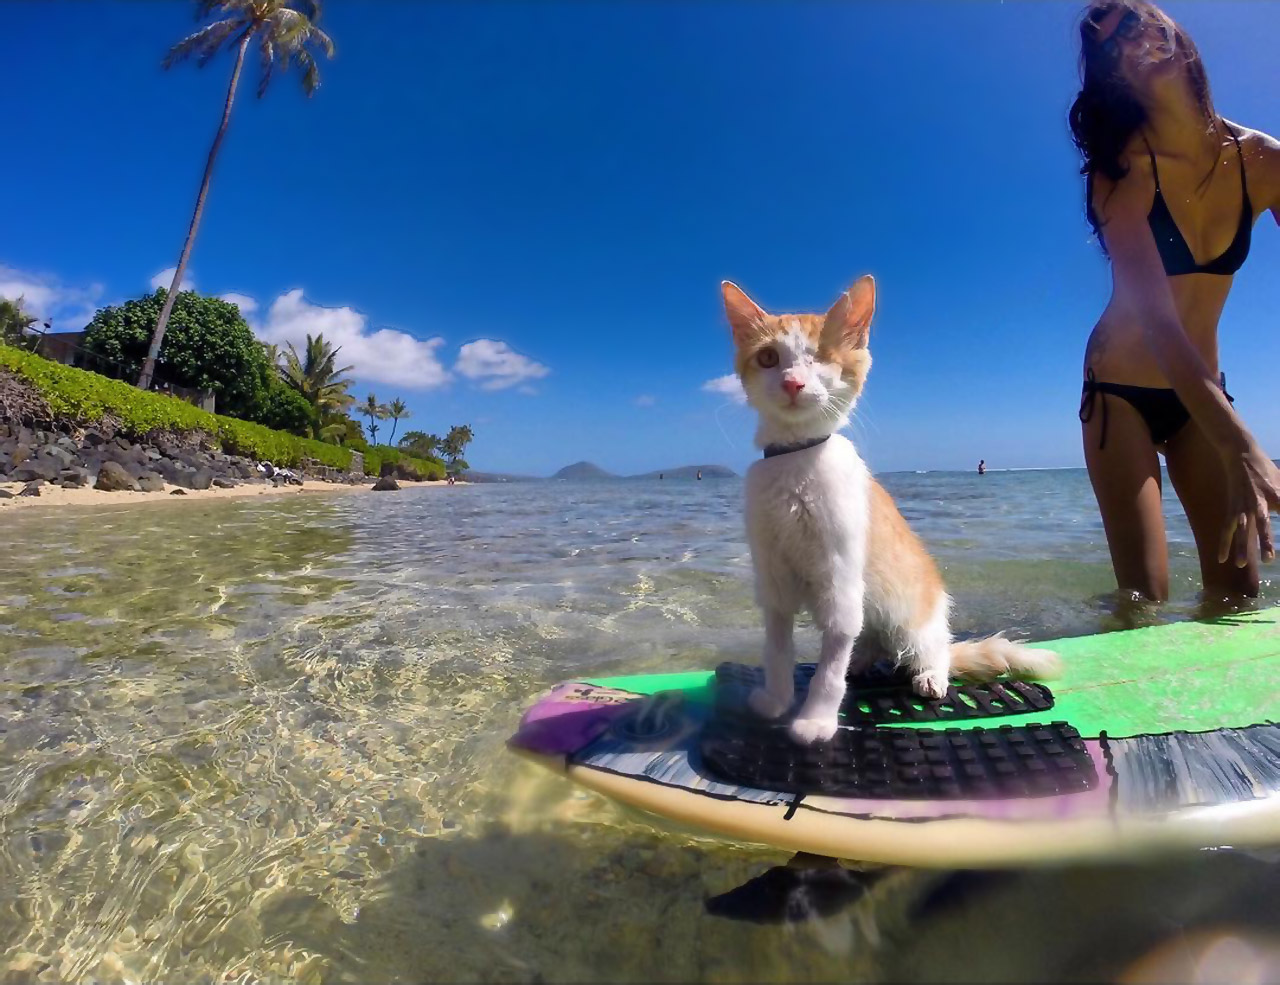 Say aloha to Kuli, the one-eyed surfing cat from Honolulu, Hawaii.